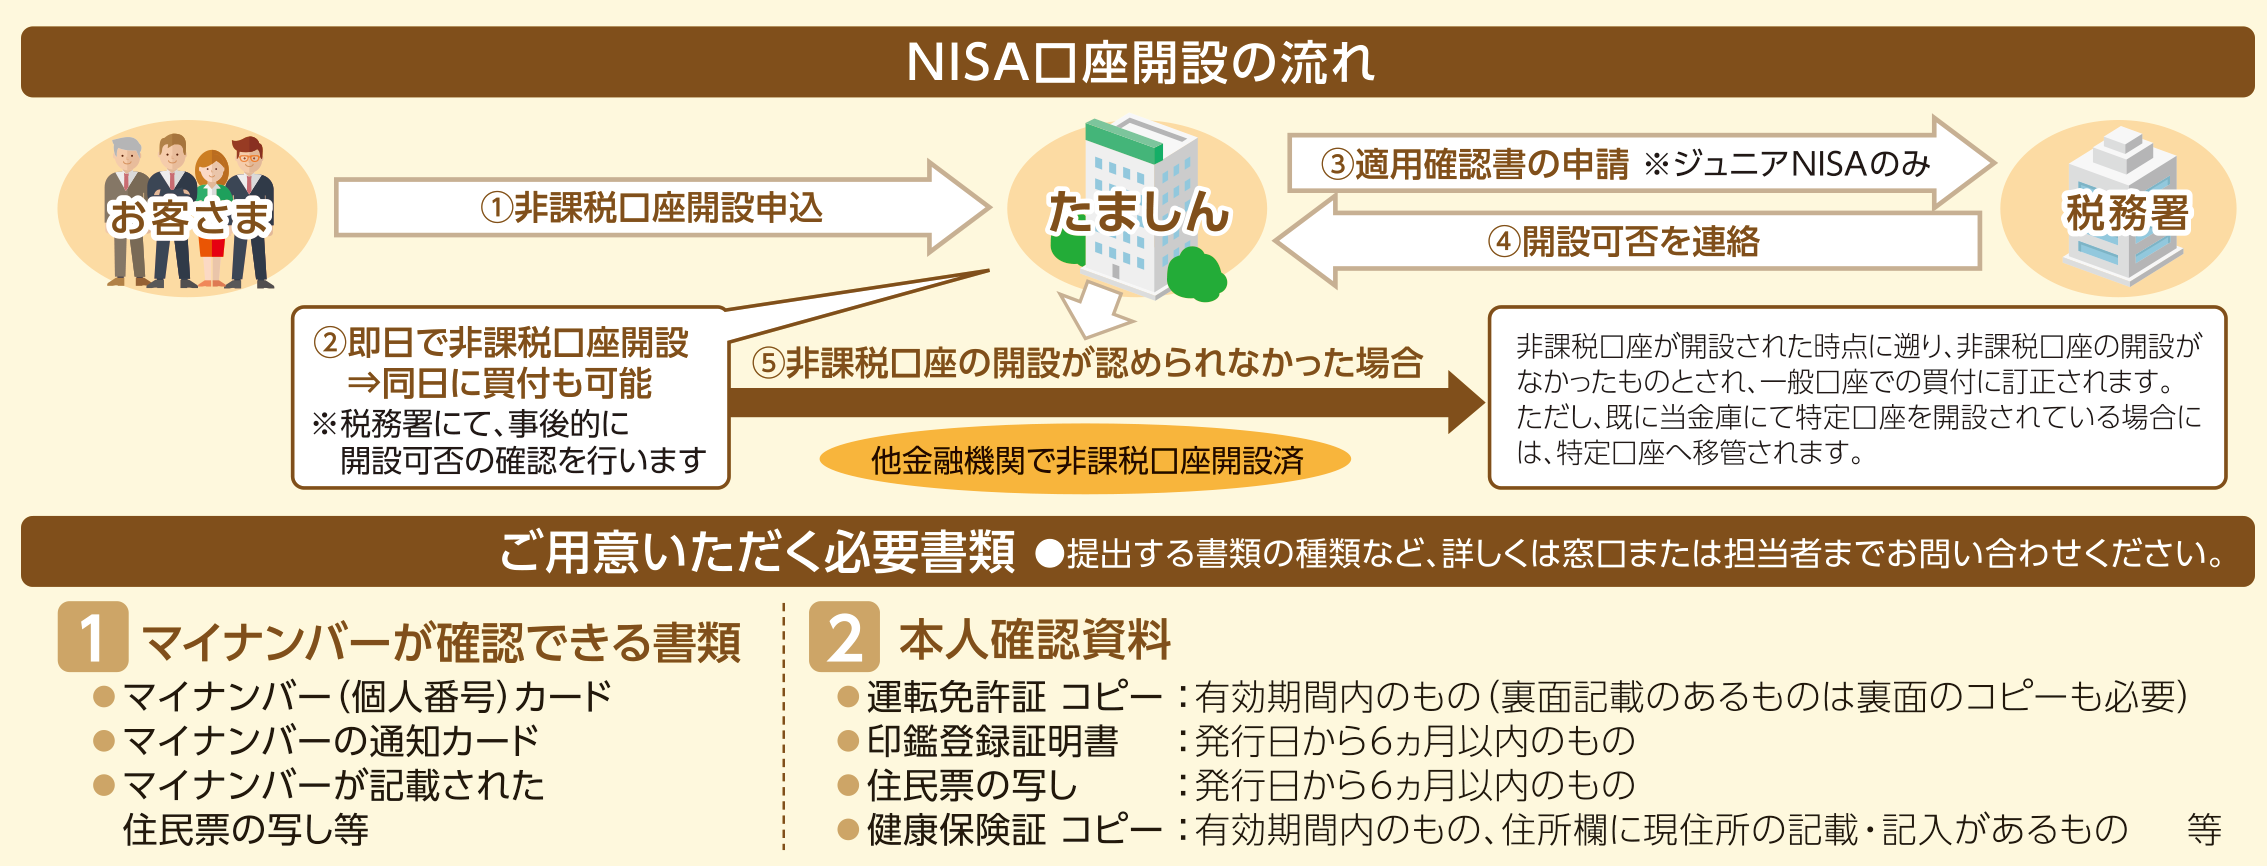 NISA口座開設の流れ